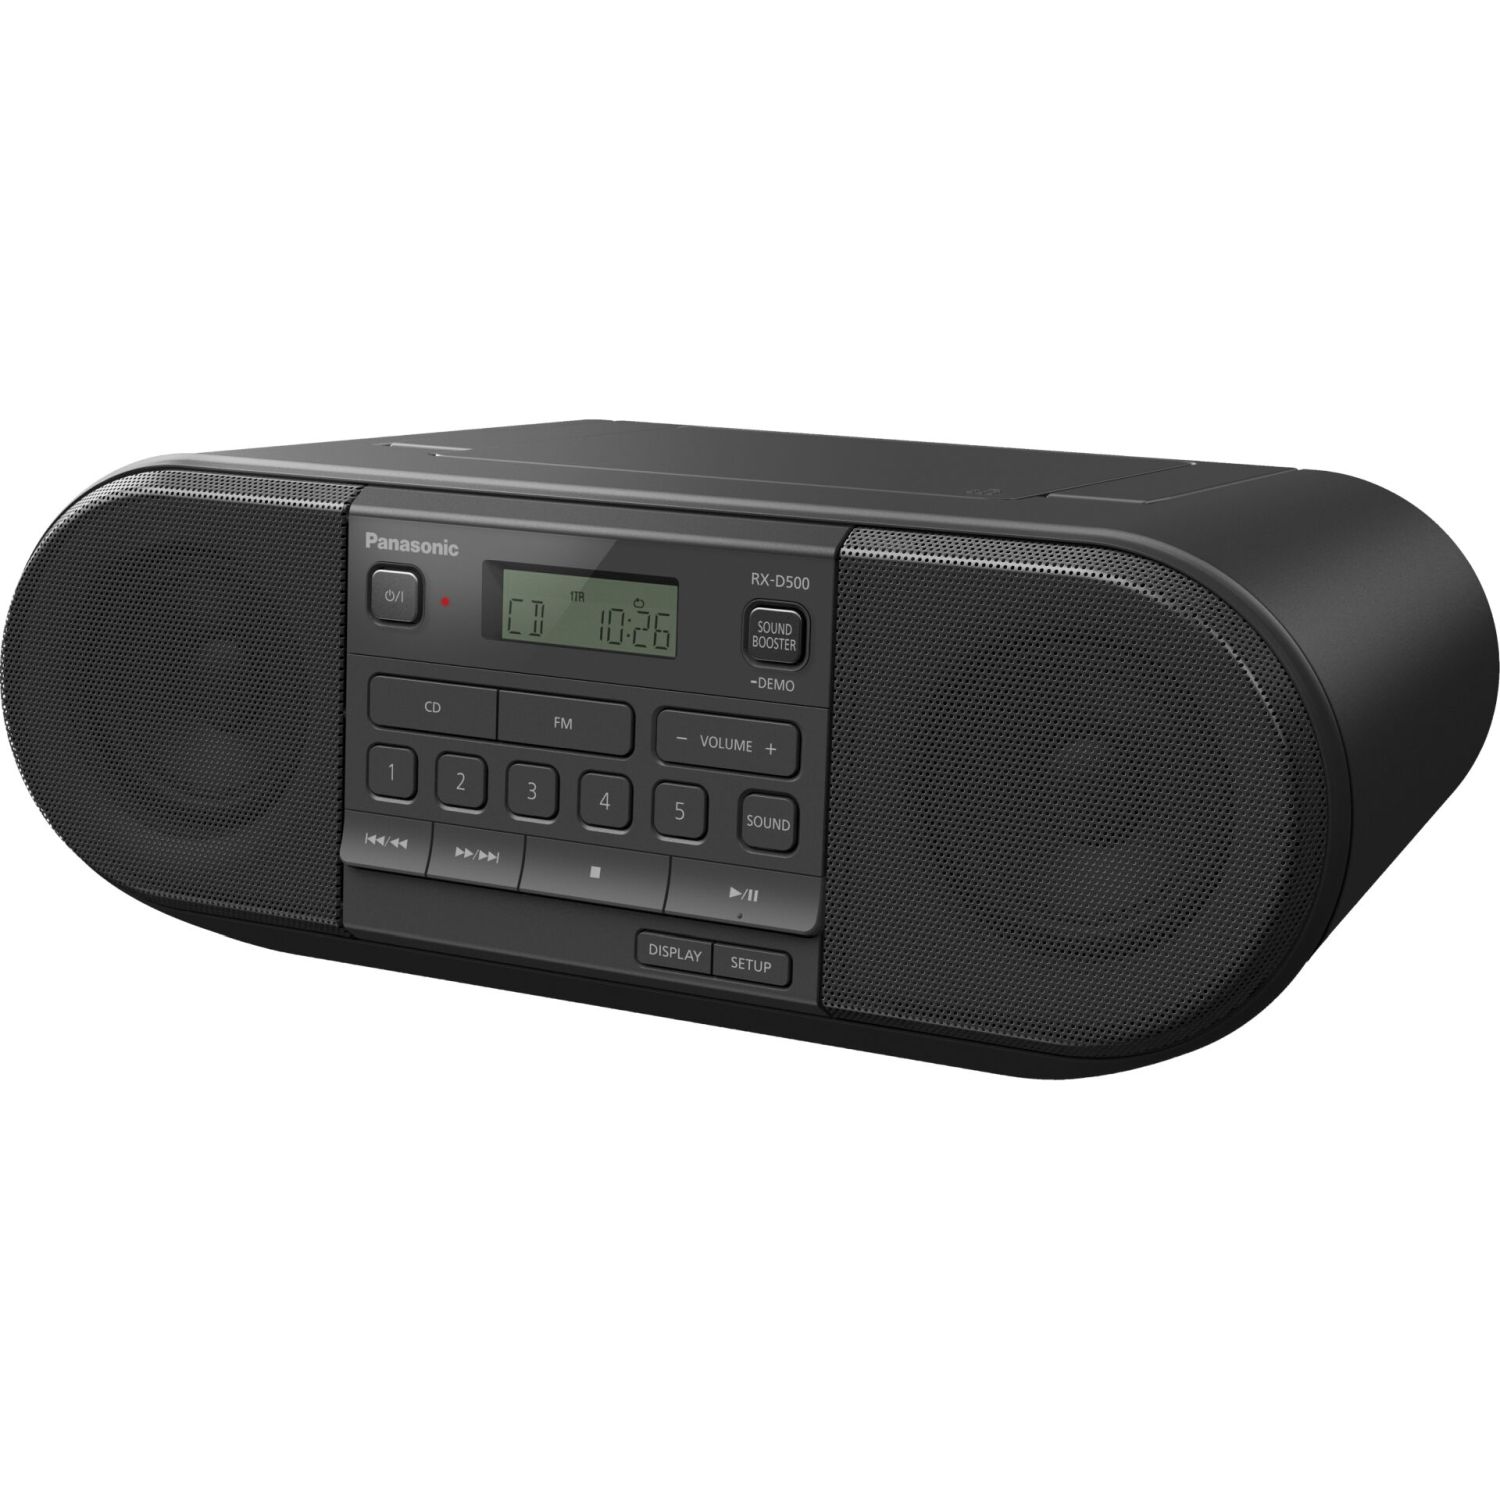 RX-D500EG-K Box Panasonic CD UKW Radio Boom